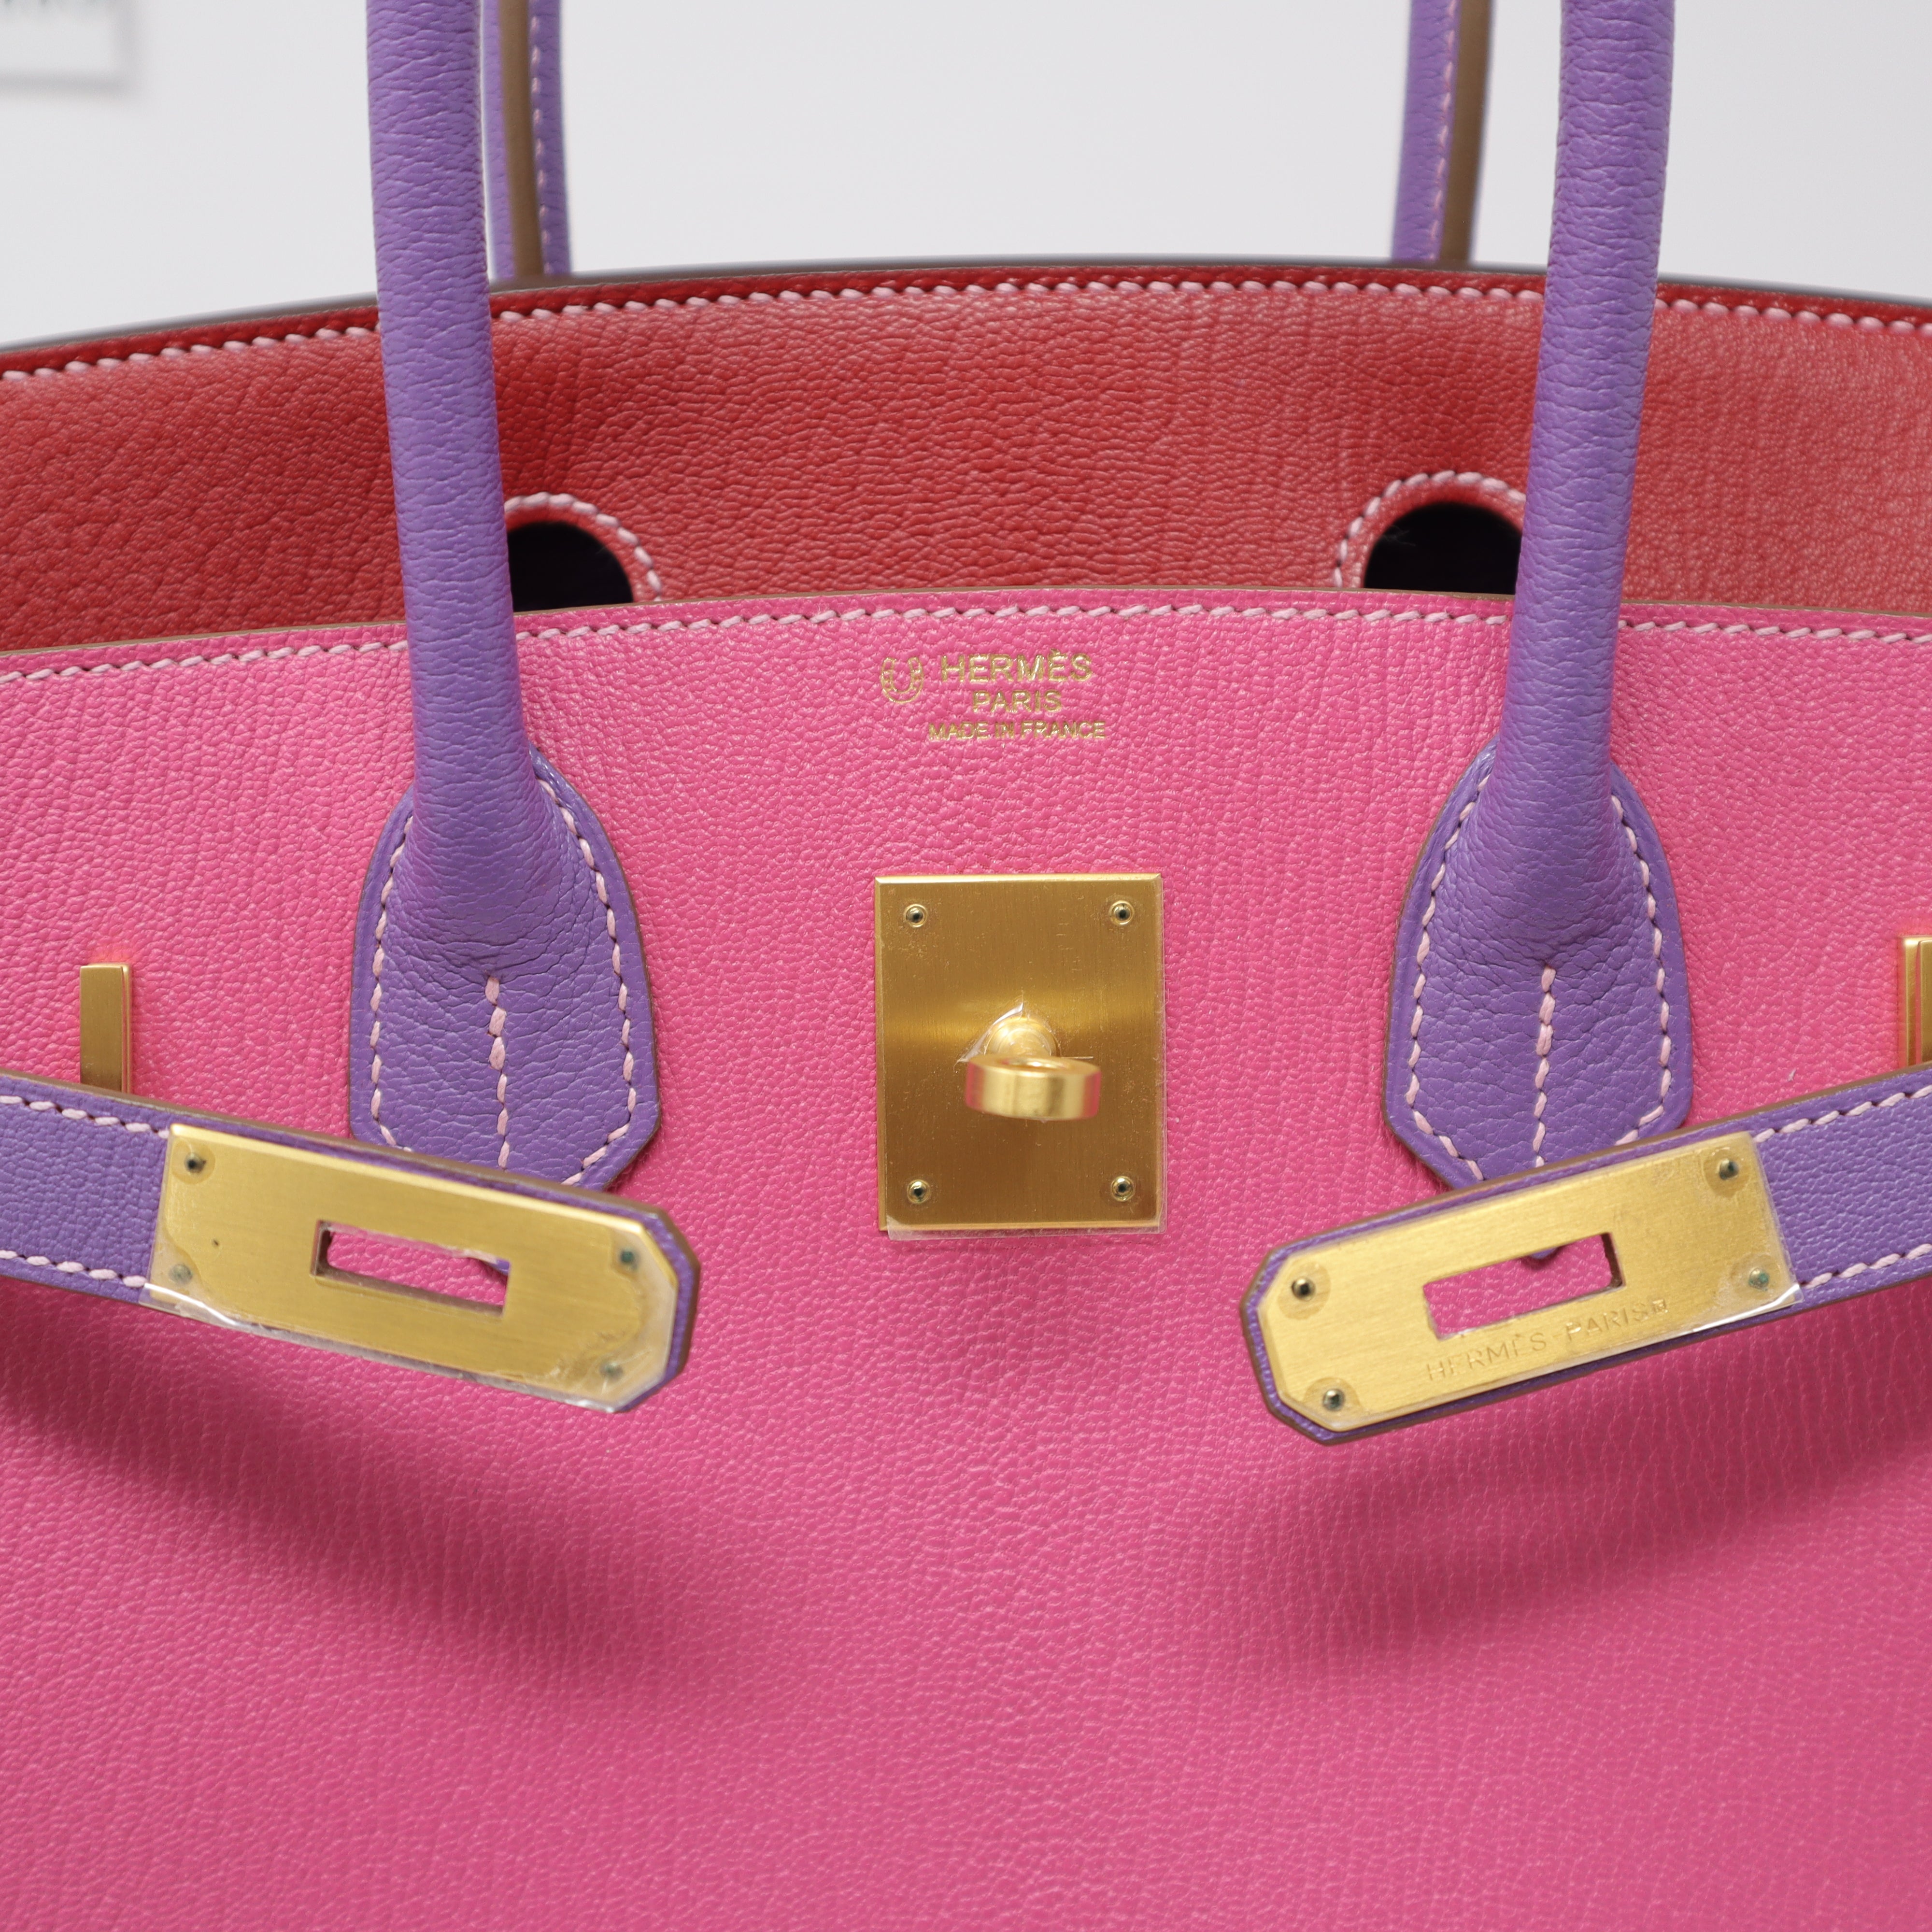 Hermès Birkin Rouge Garance Togo Handbag